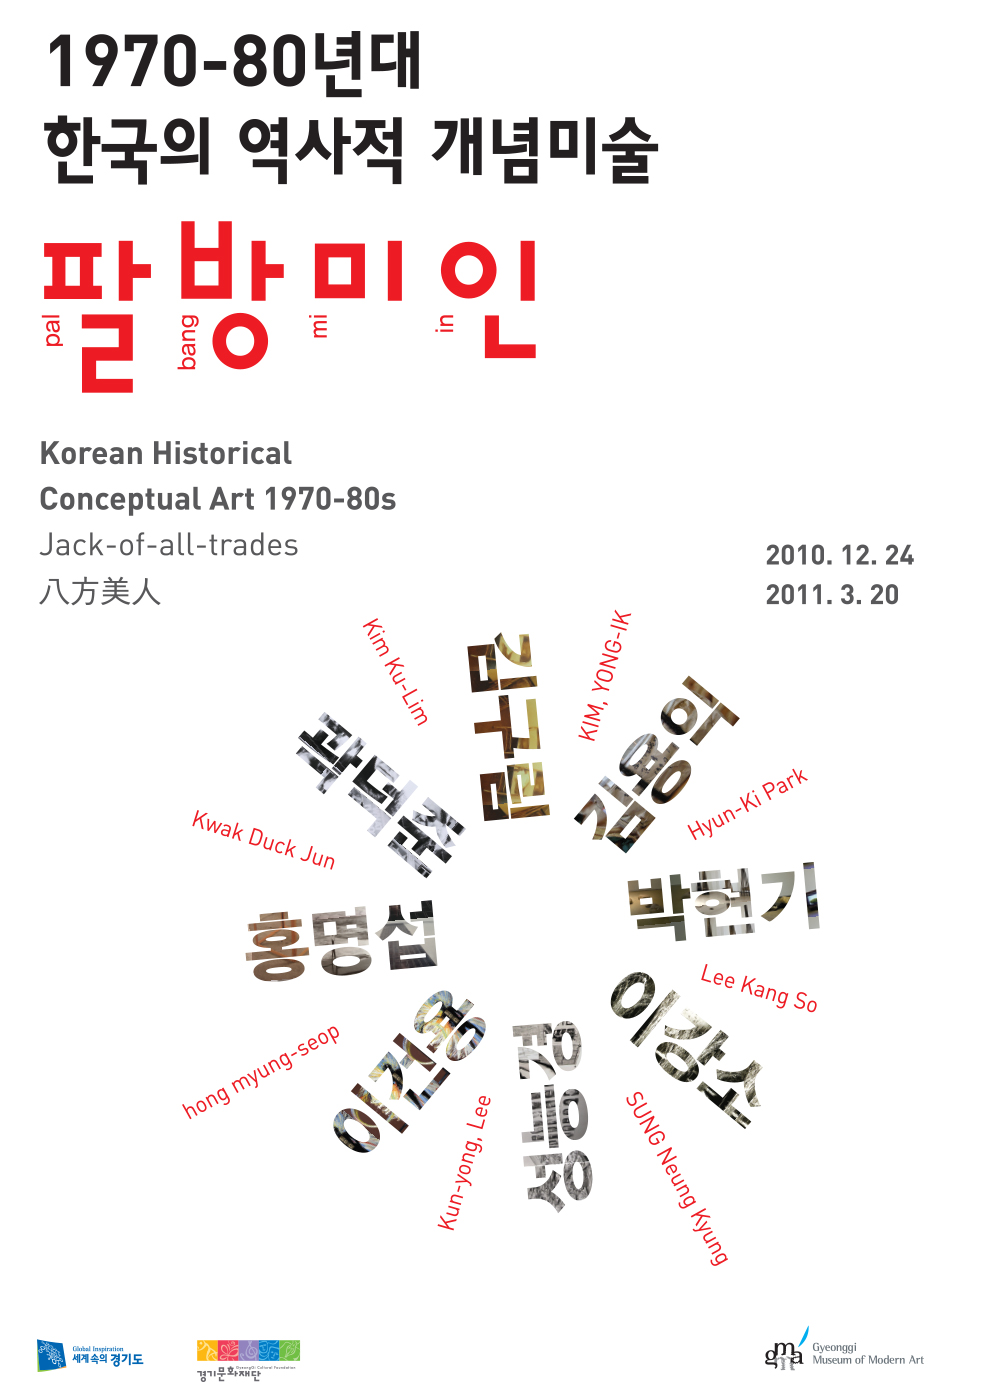 Jack-of-all-trades: Korean historical conceptual art 1970-80s